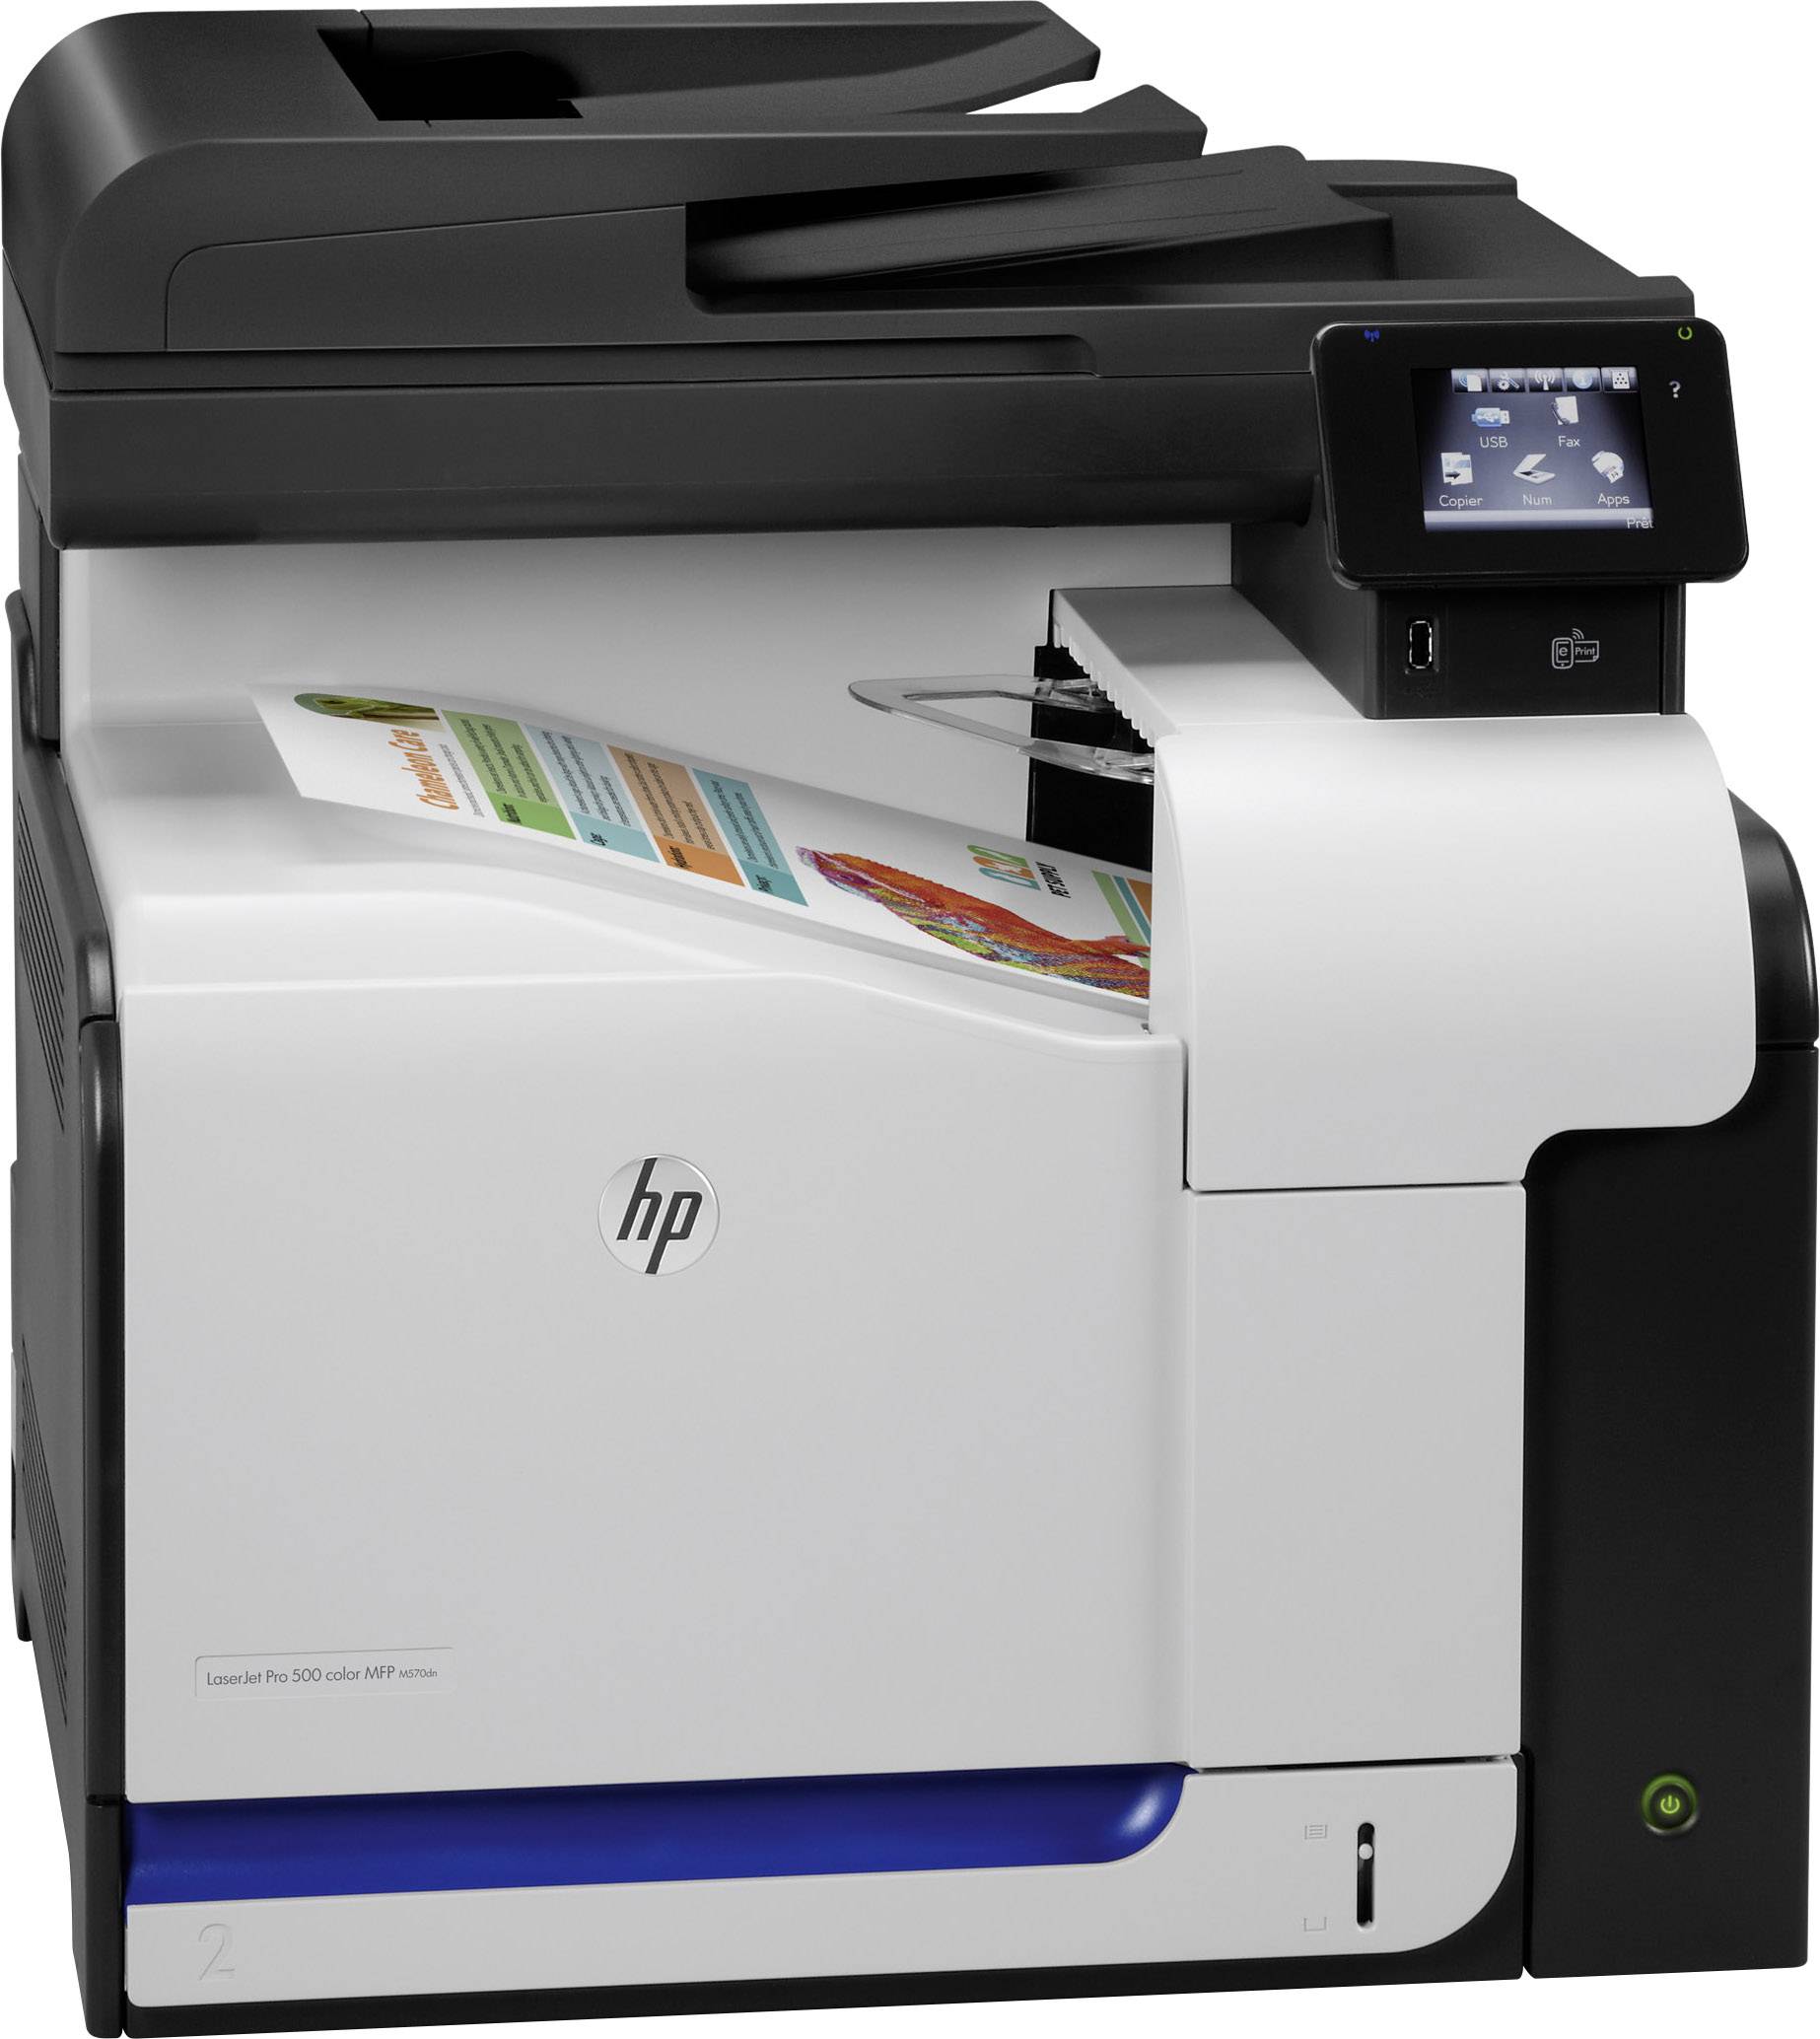 hp laserjet printer p1006 driver